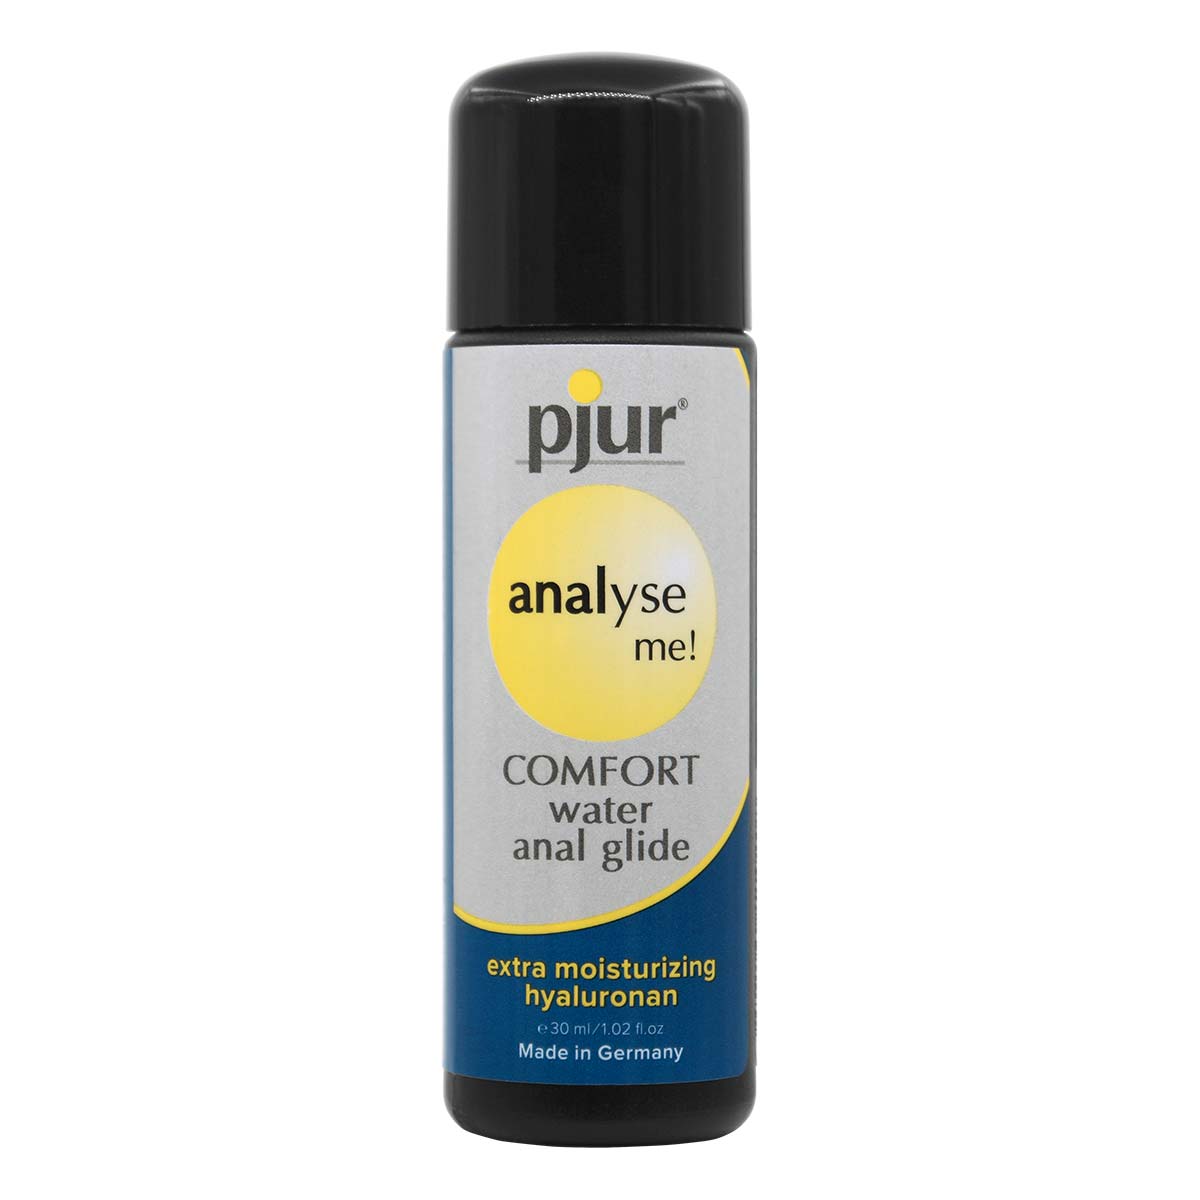 pjur analyse me! COMFORT Water Anal Glide 30ml Water-based Lubricant-p_2